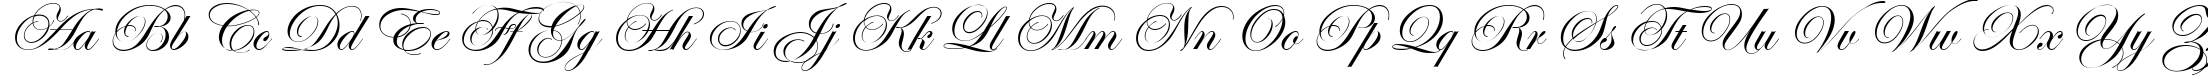 Пример написания английского алфавита шрифтом Edwardian Scr ITC TT